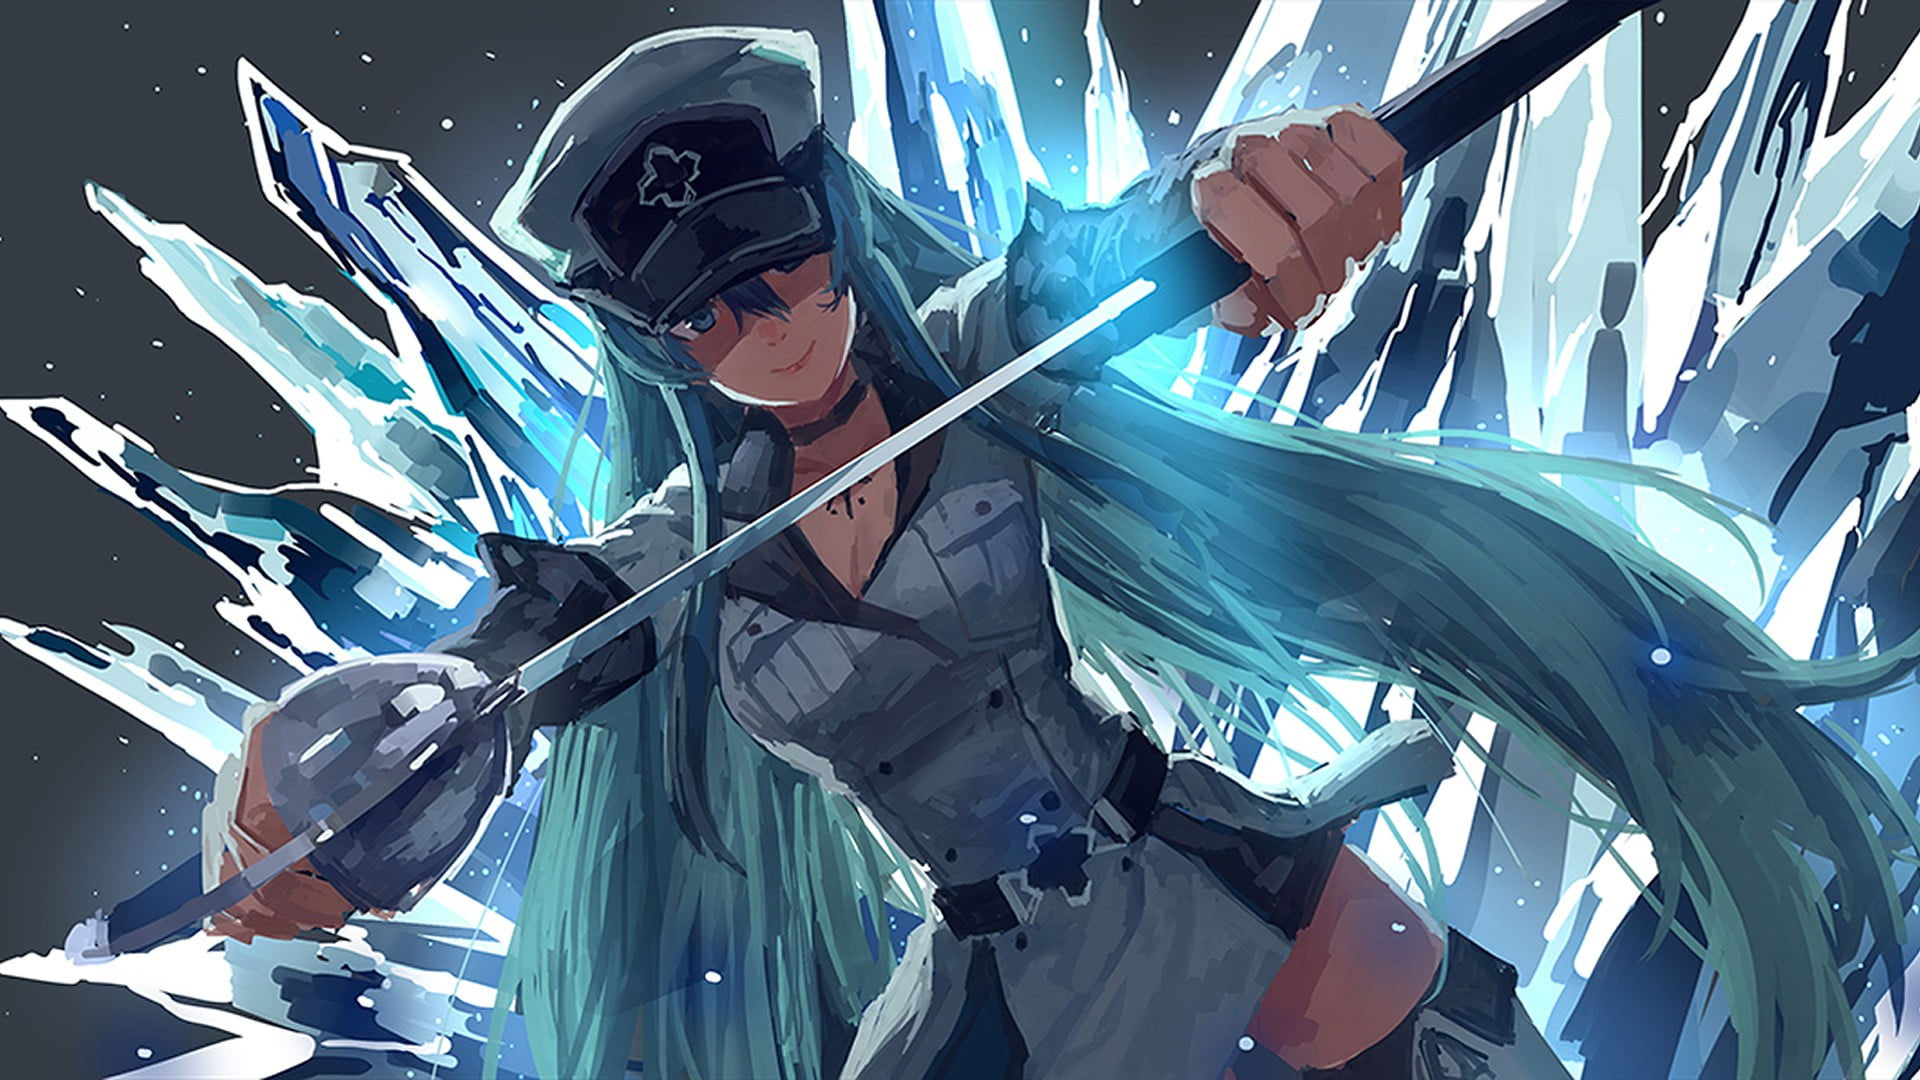 Wallpaper Blue Haired Female Anime Character - Wallpaperforu